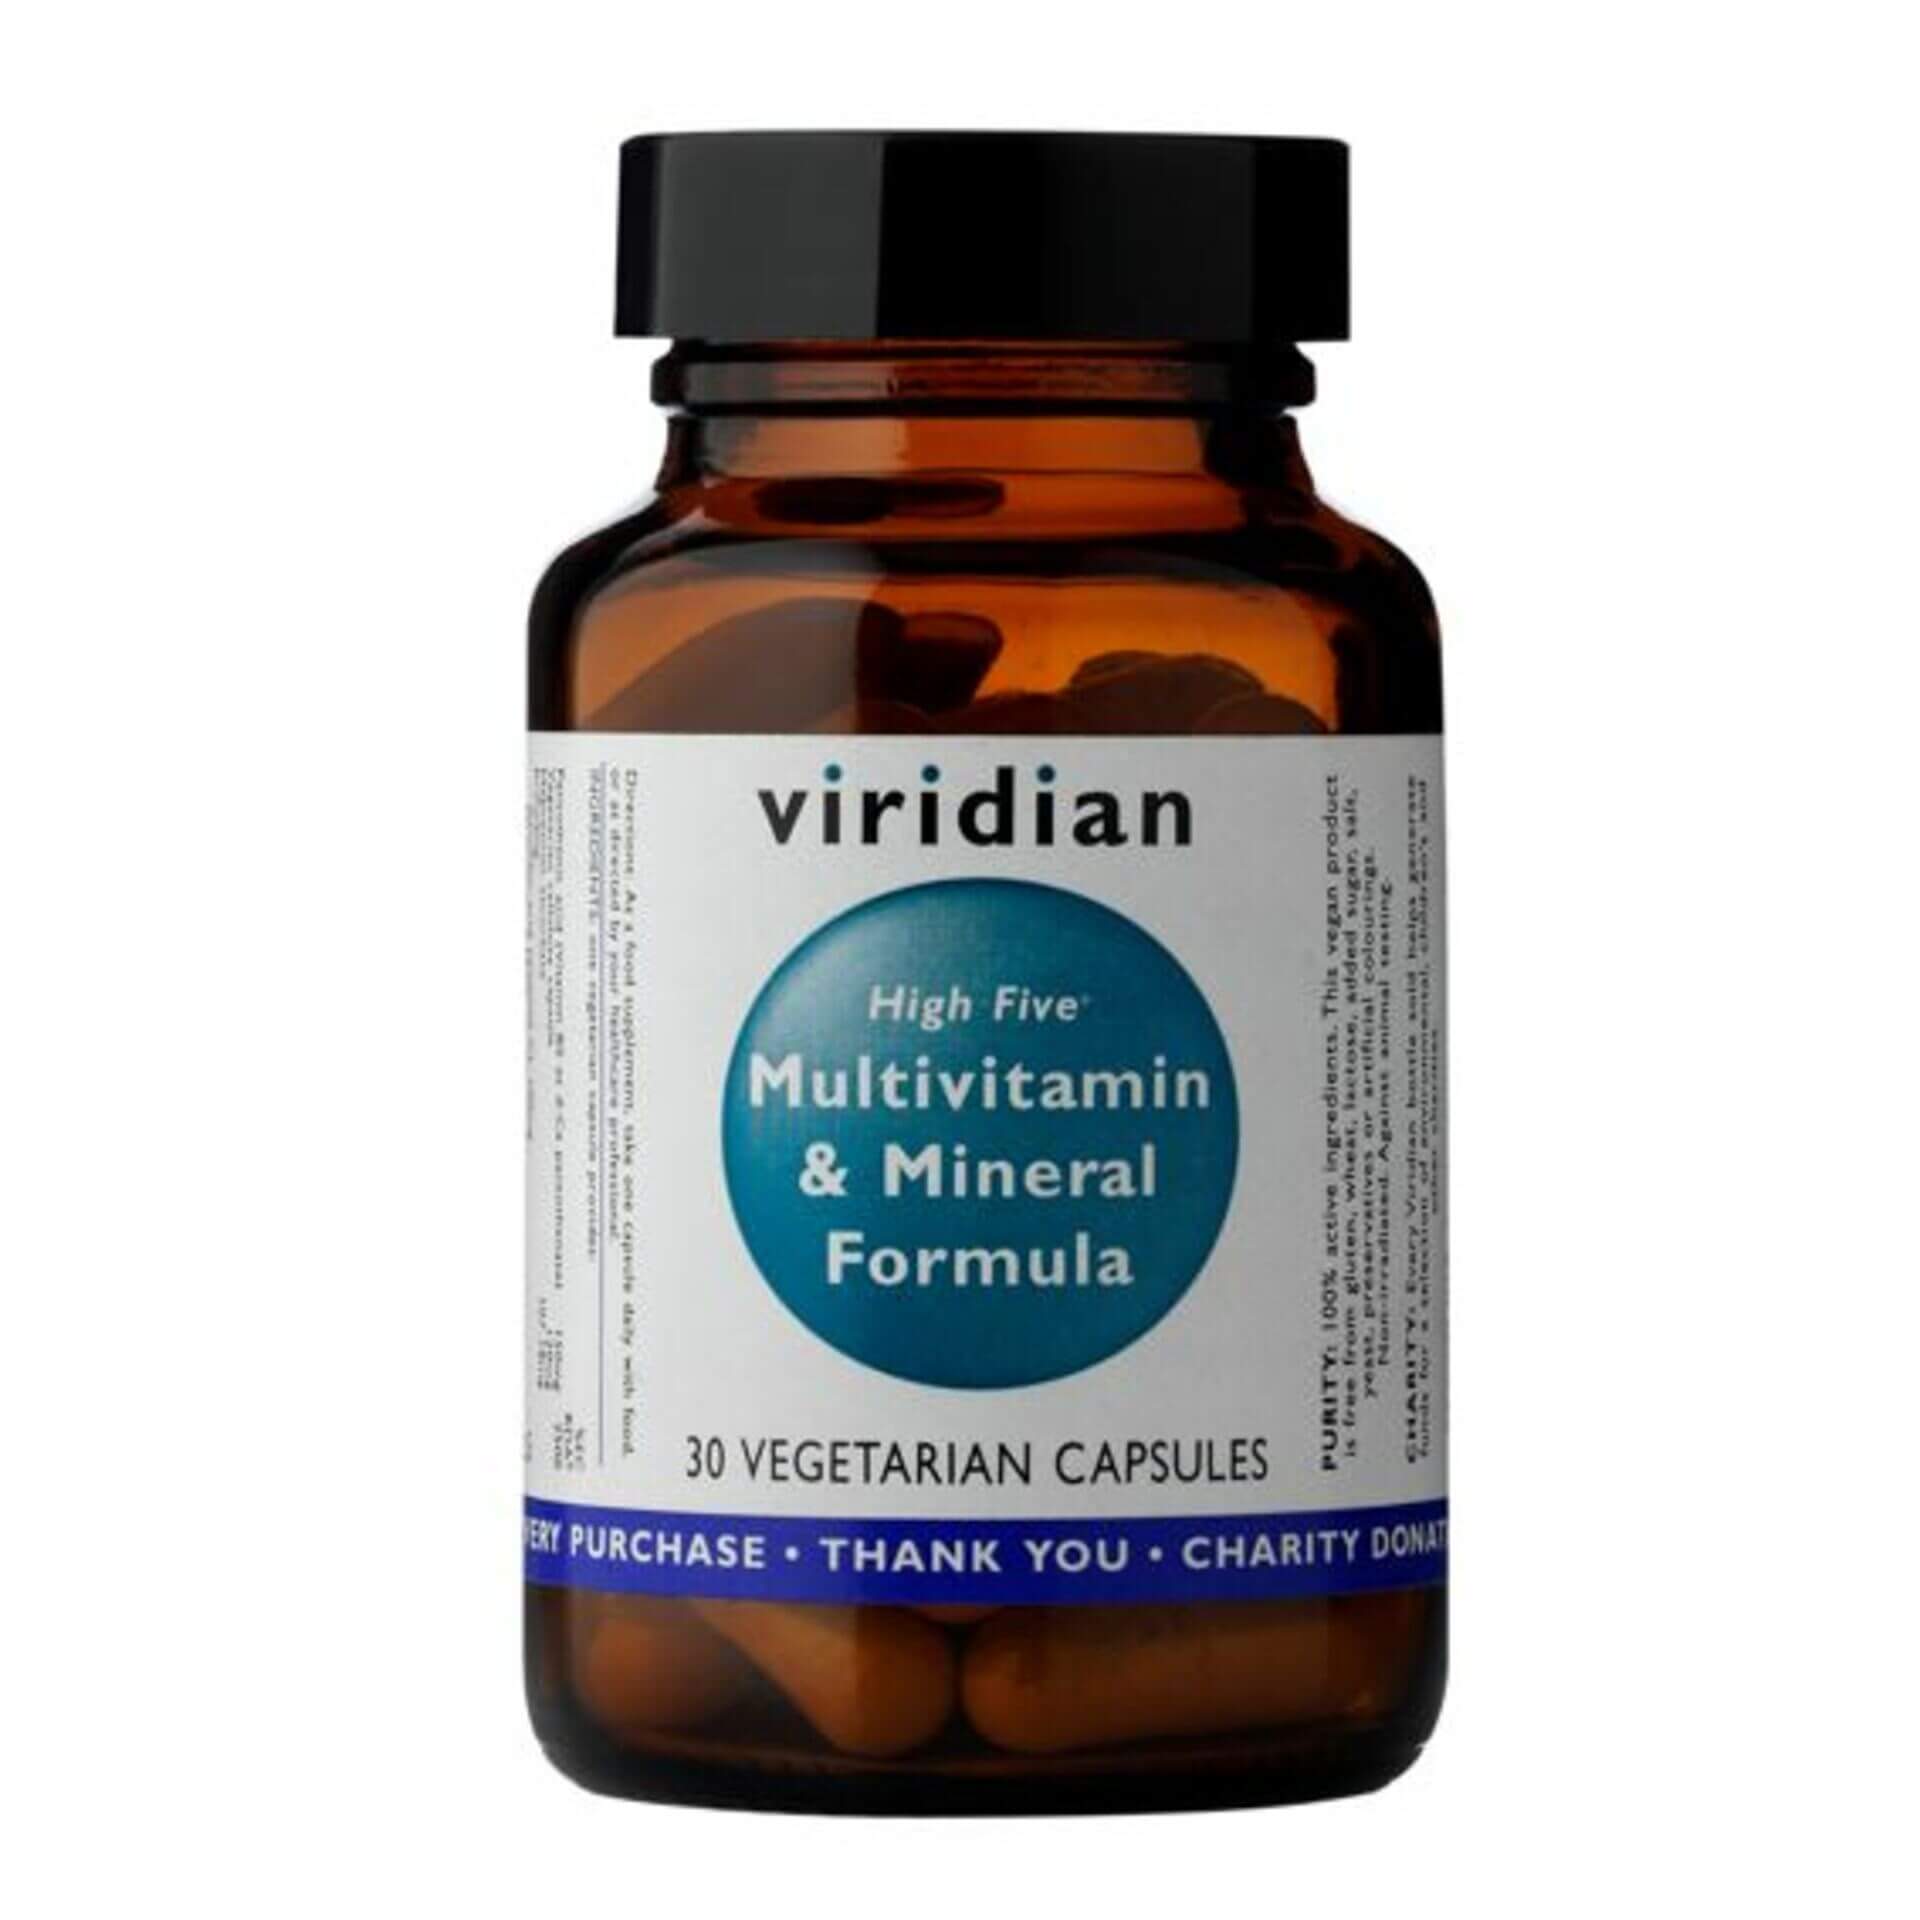 Viridian High five multivitamin and mineral formula 30 tablet